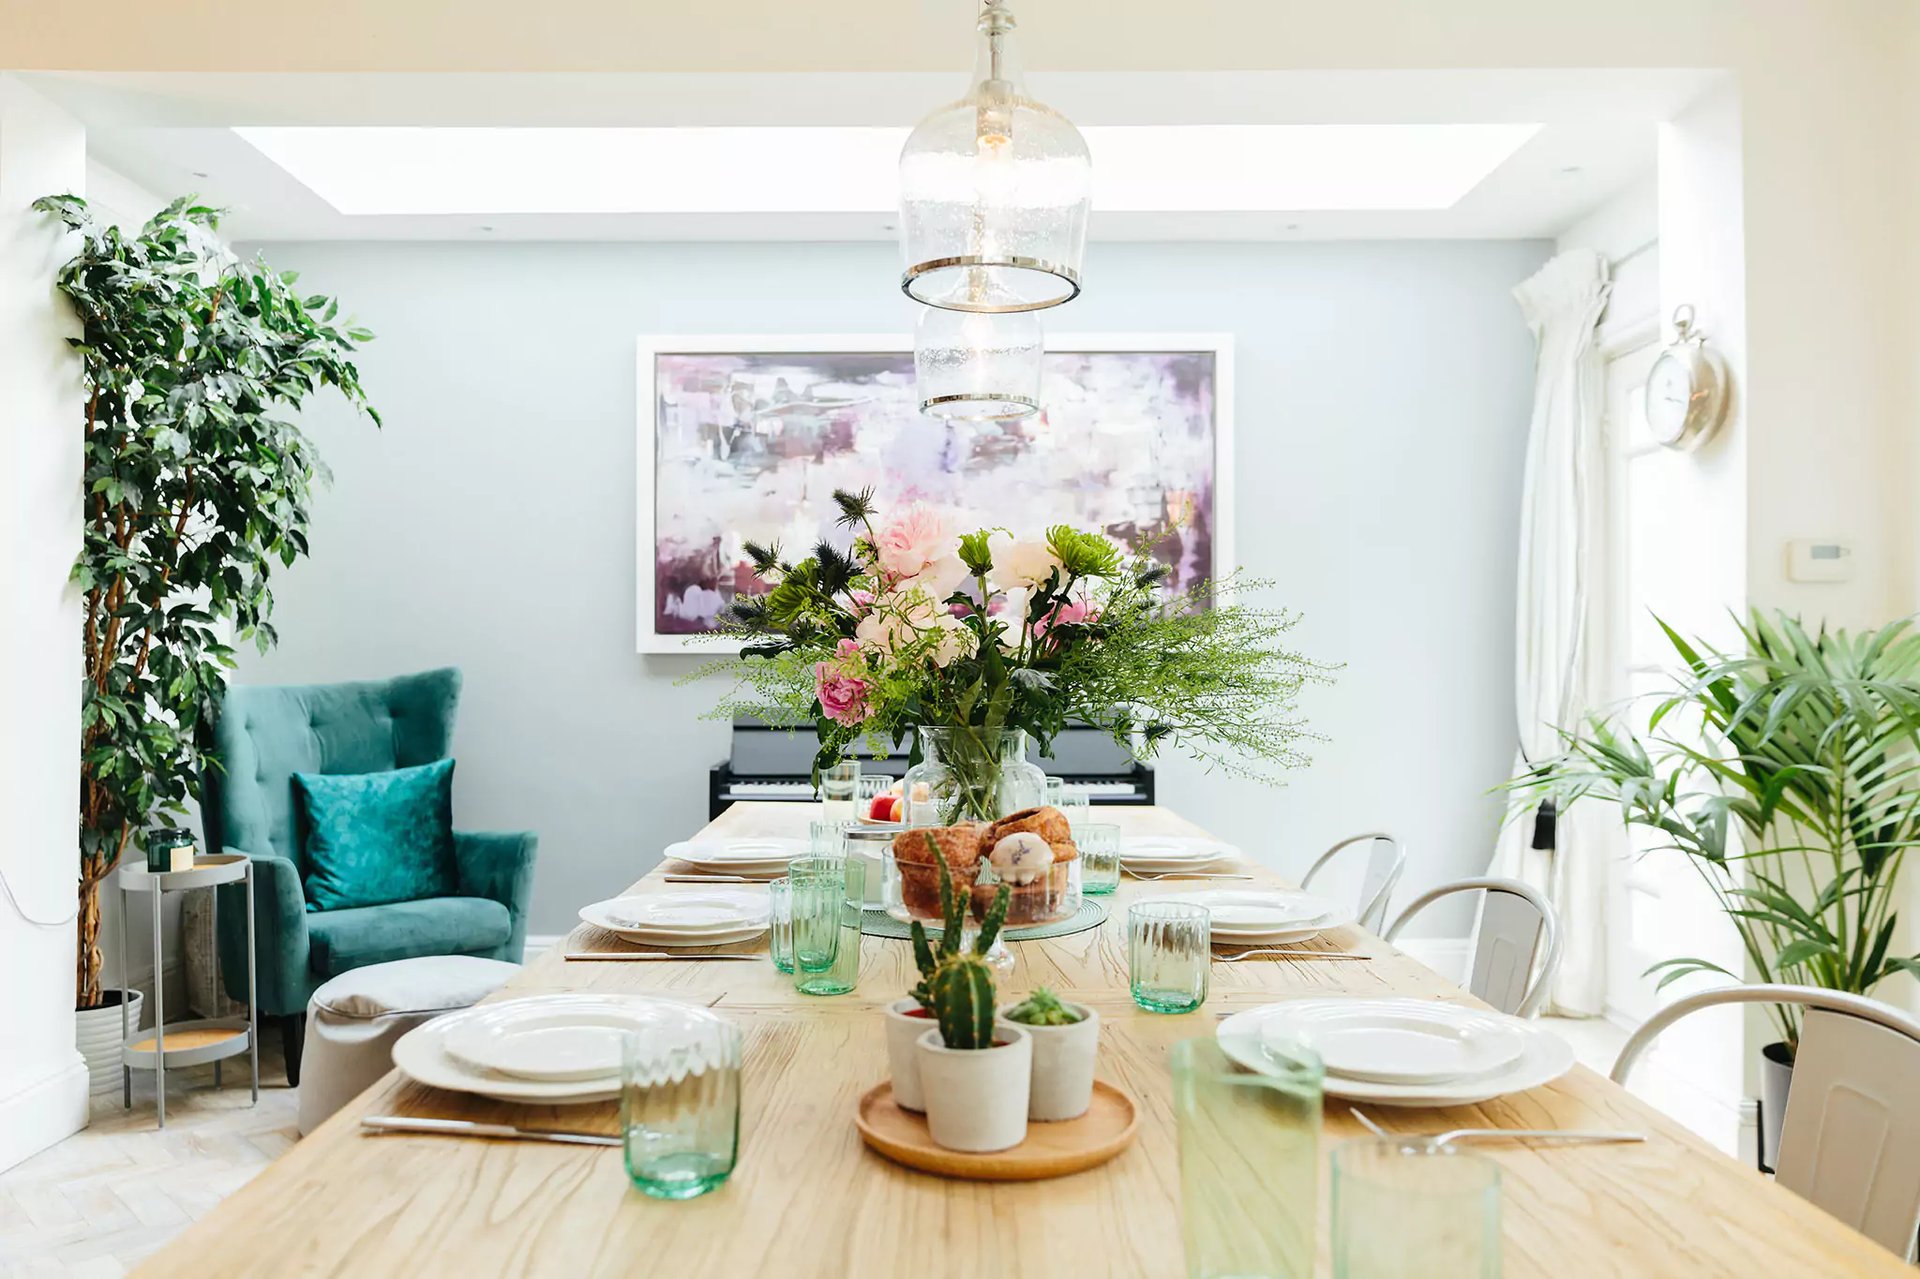 Dining table inspiration | interior design